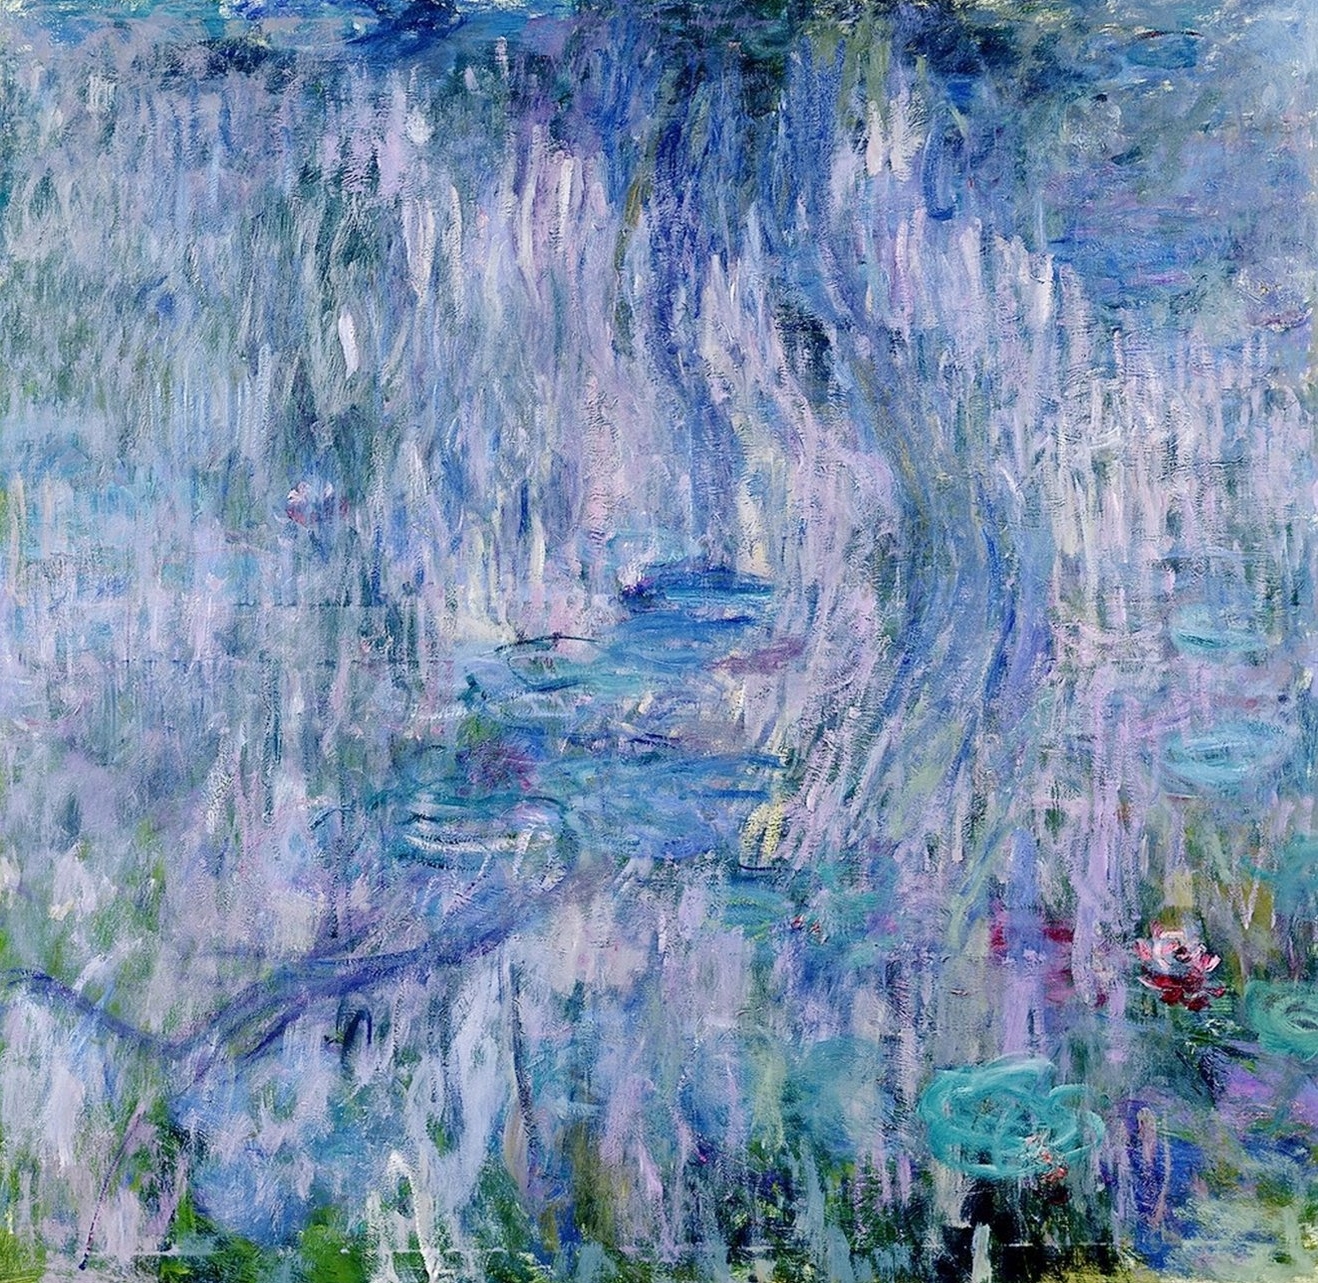 Claude+Monet-1840-1926 (547).jpg